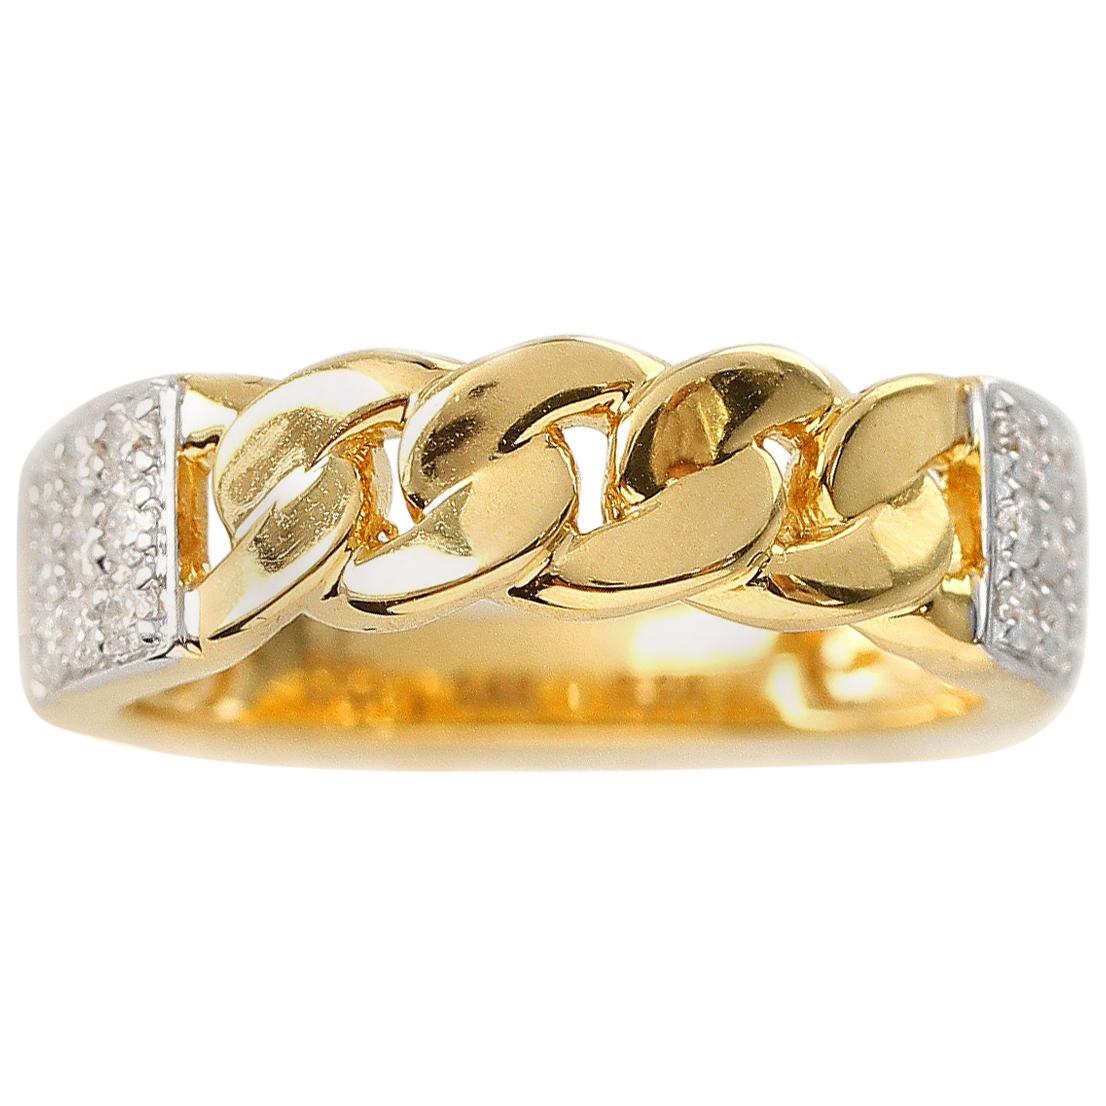 Yellow Gold Rope-Style Ring with Diamonds, 14 Karat